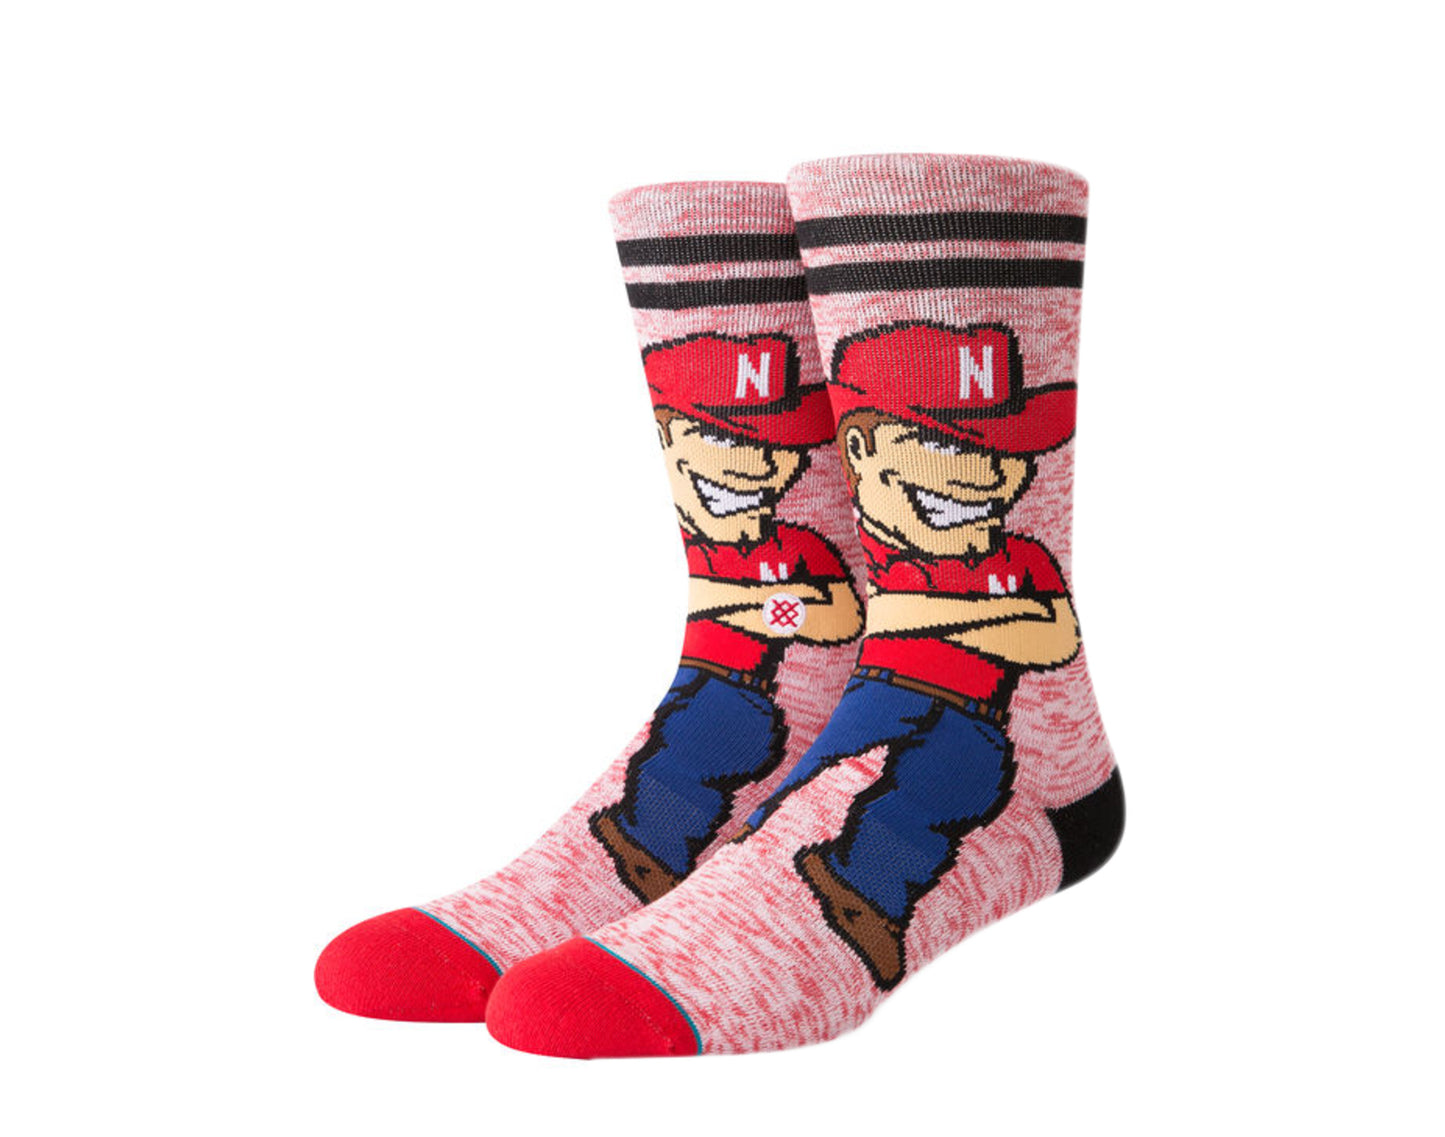 Stance NCAA Nebraska Herbie Character Socks